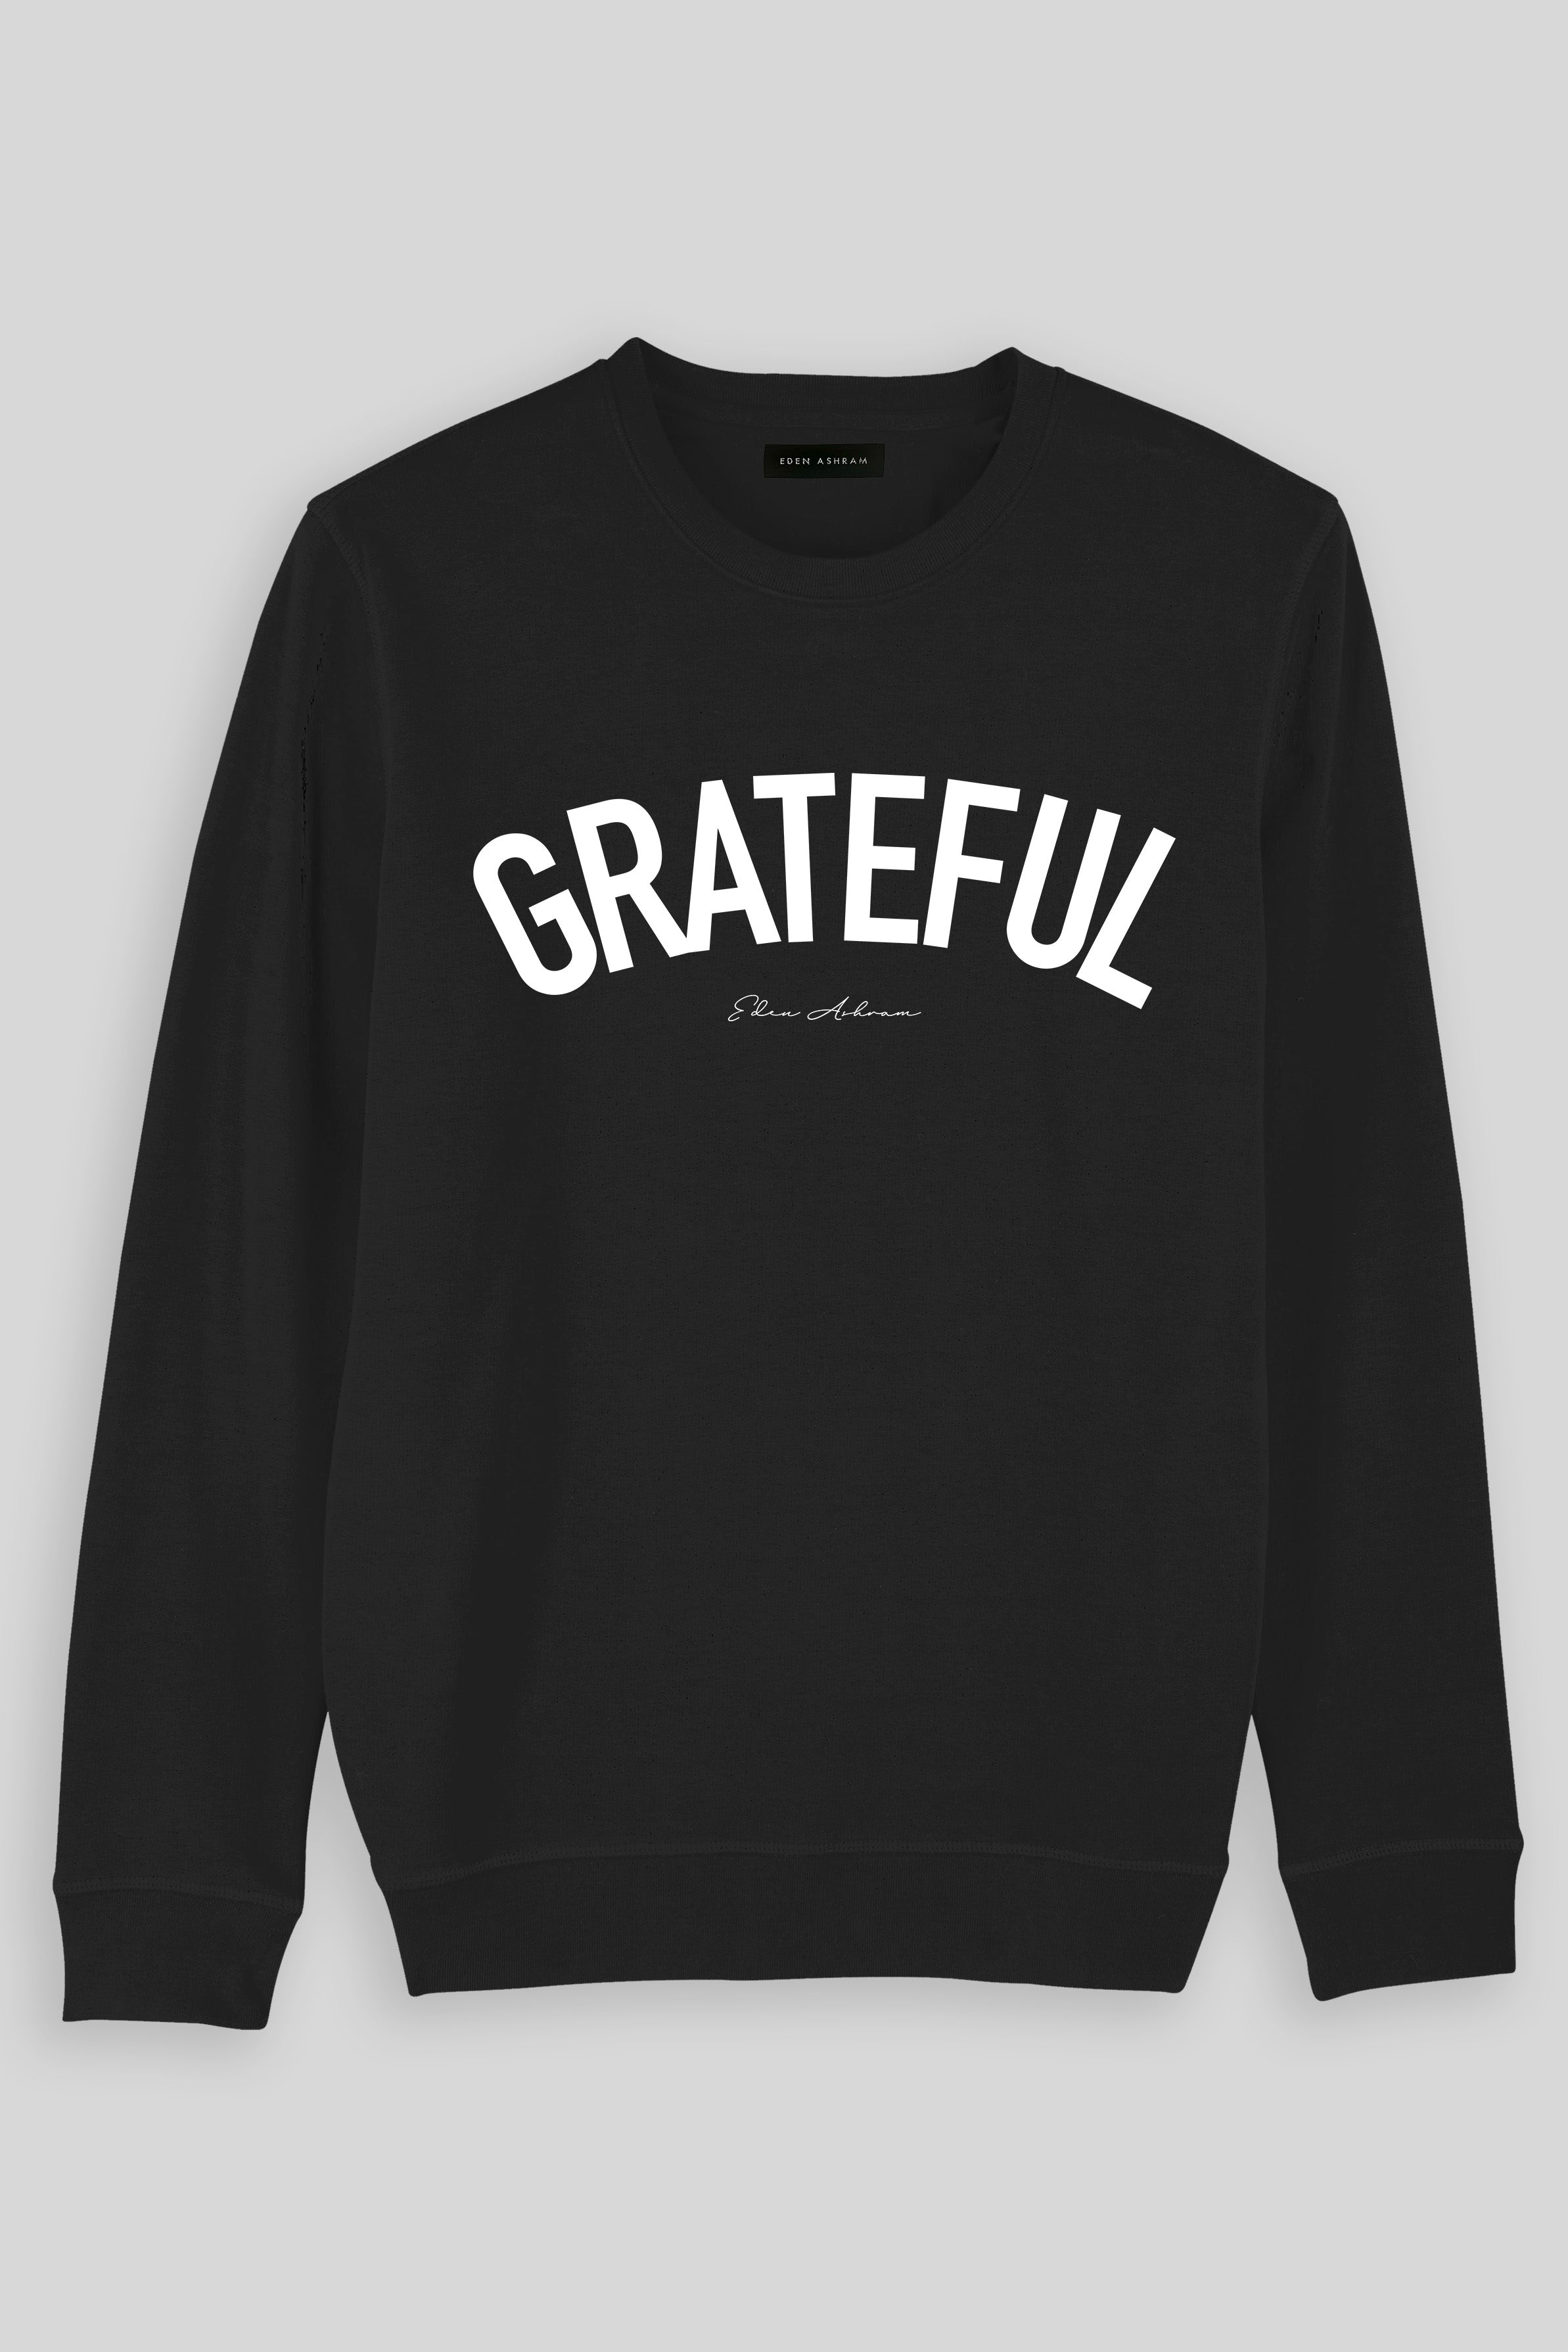 EDEN ASHRAM Grateful Premium Crew Neck Sweatshirt Vintage Black